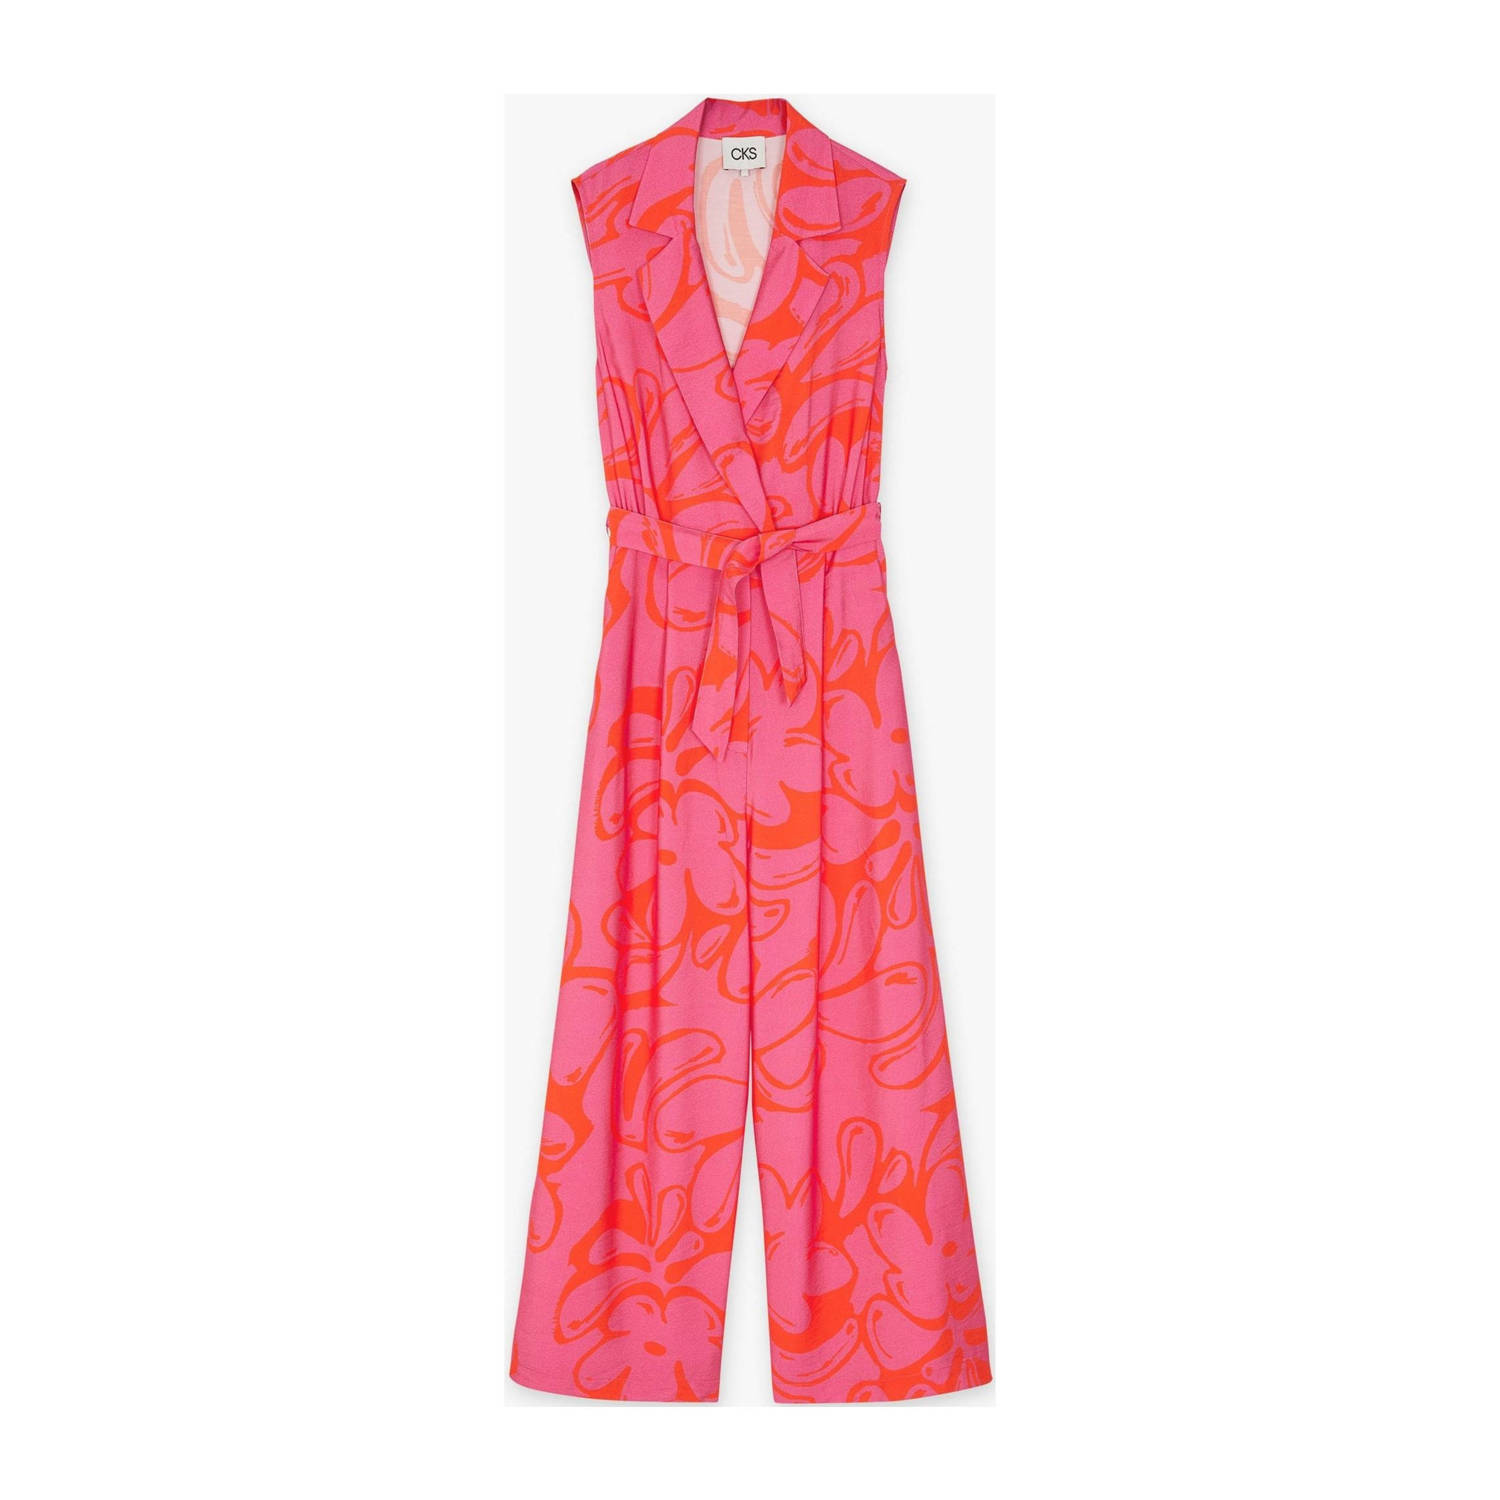 CKS jumpsuit met all over print roze oranje